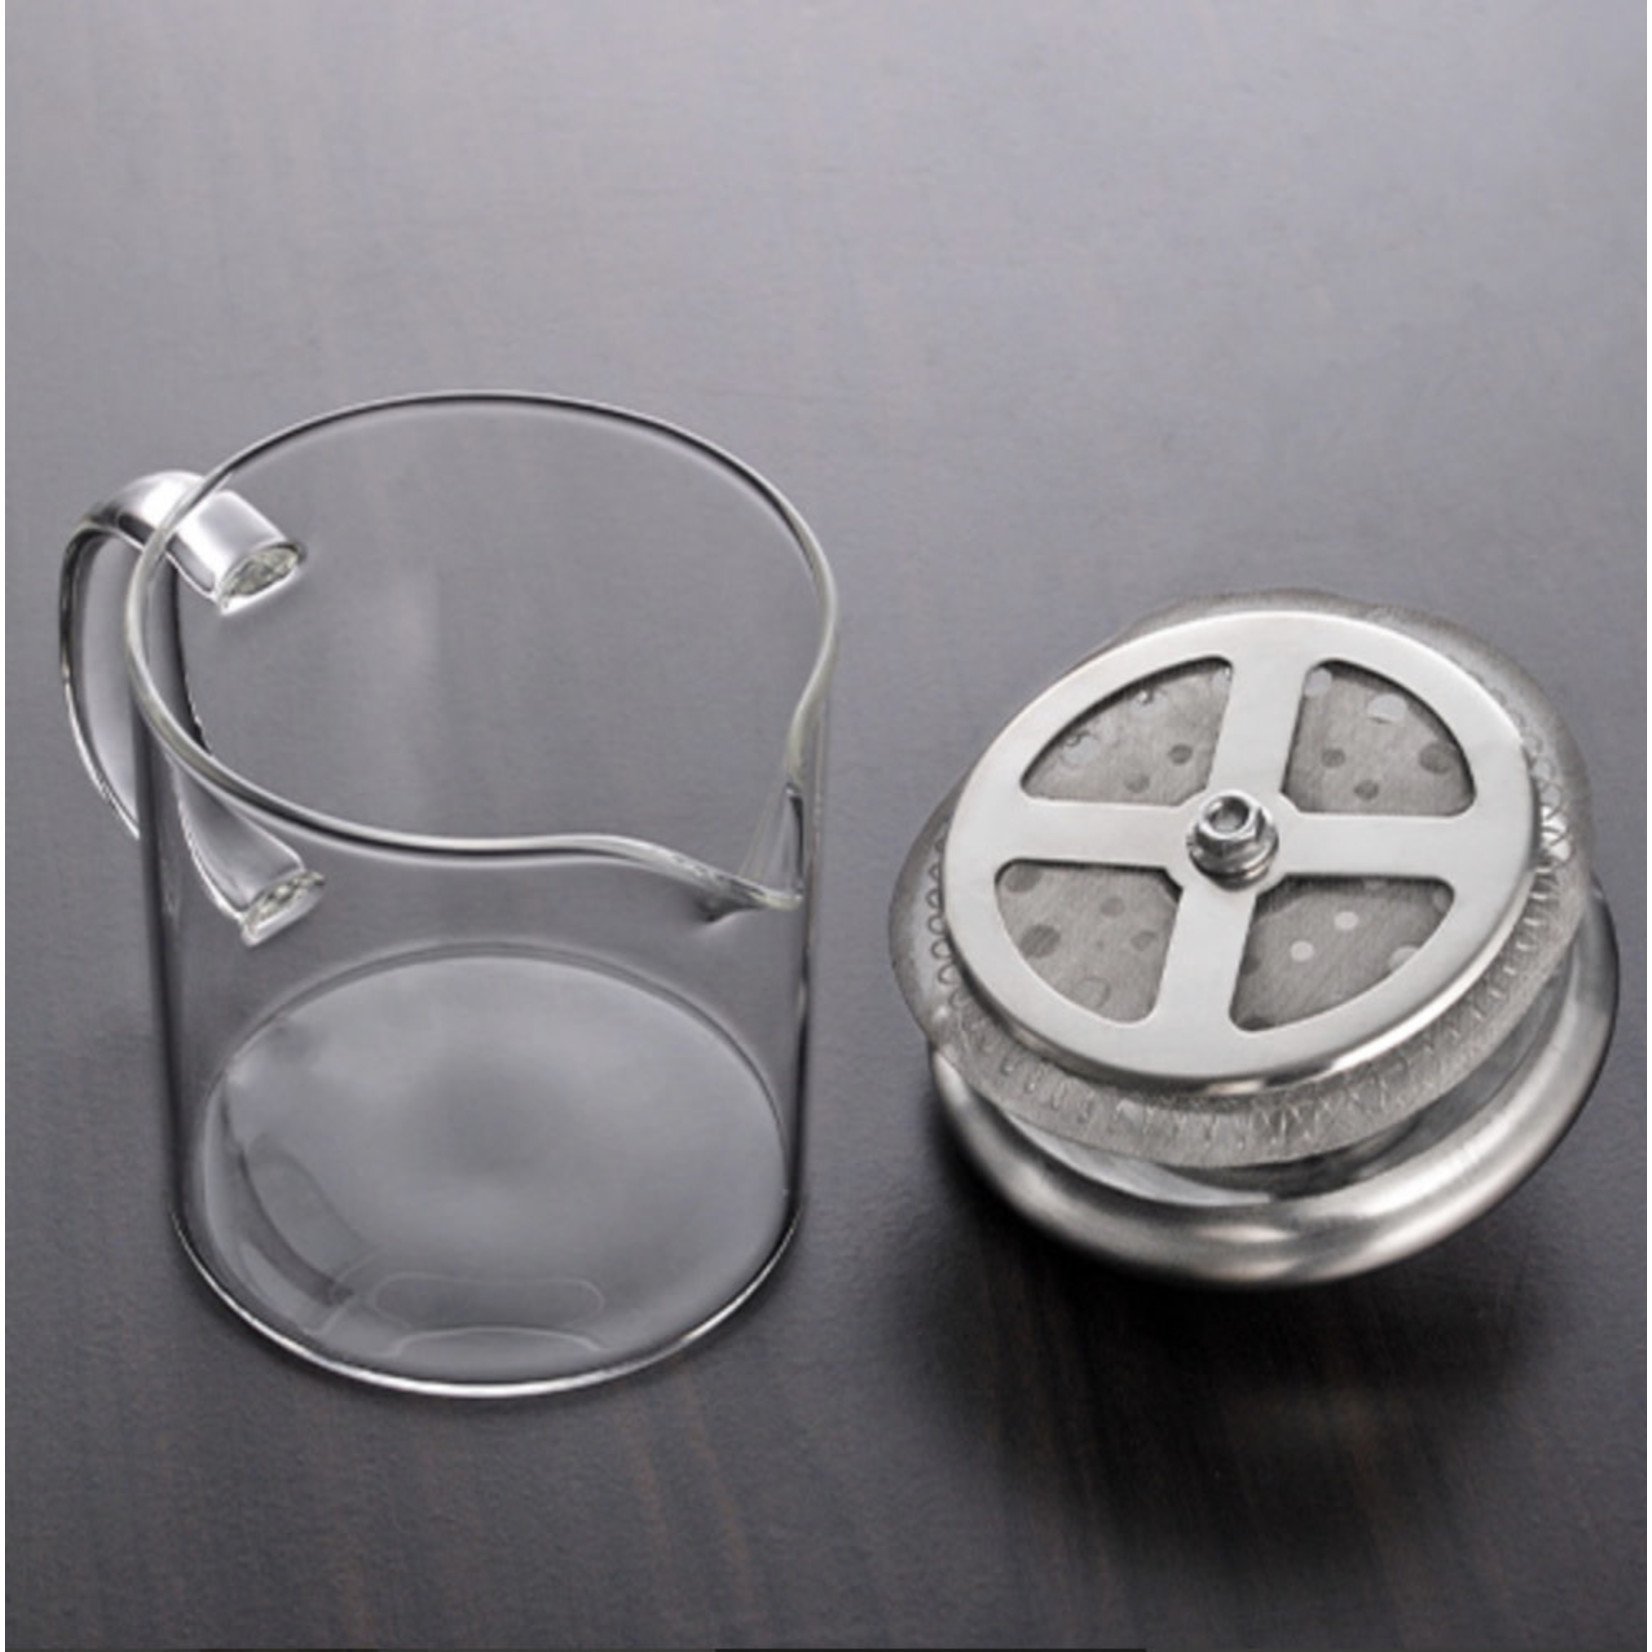 Tea Concept Teapot / Mug Glass w/Strainer Lid 400ml - JQ400-FP1